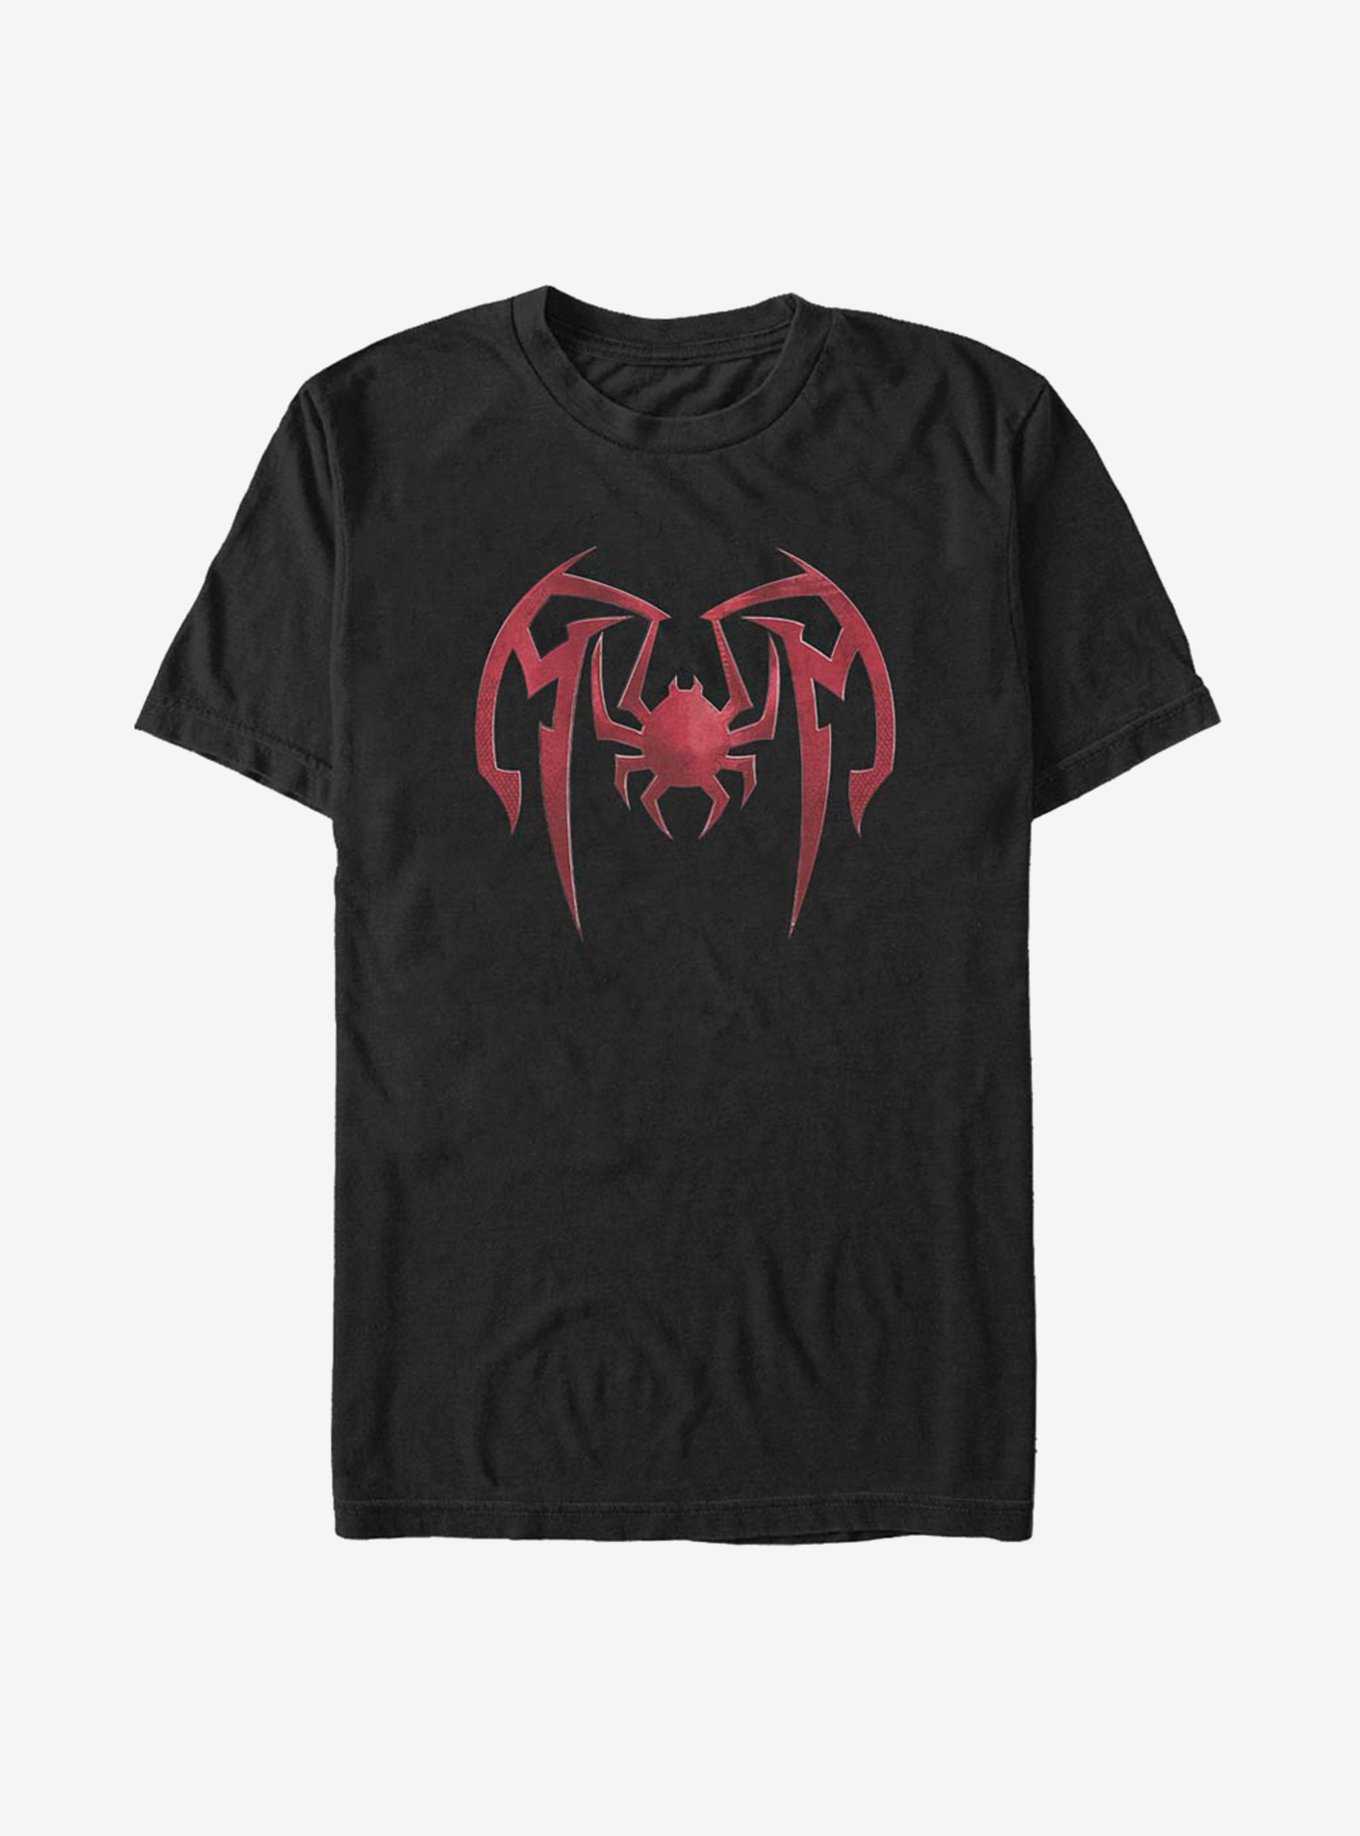 Marvel Spider-Man Miles Morales Mask Icon T-Shirt, , hi-res